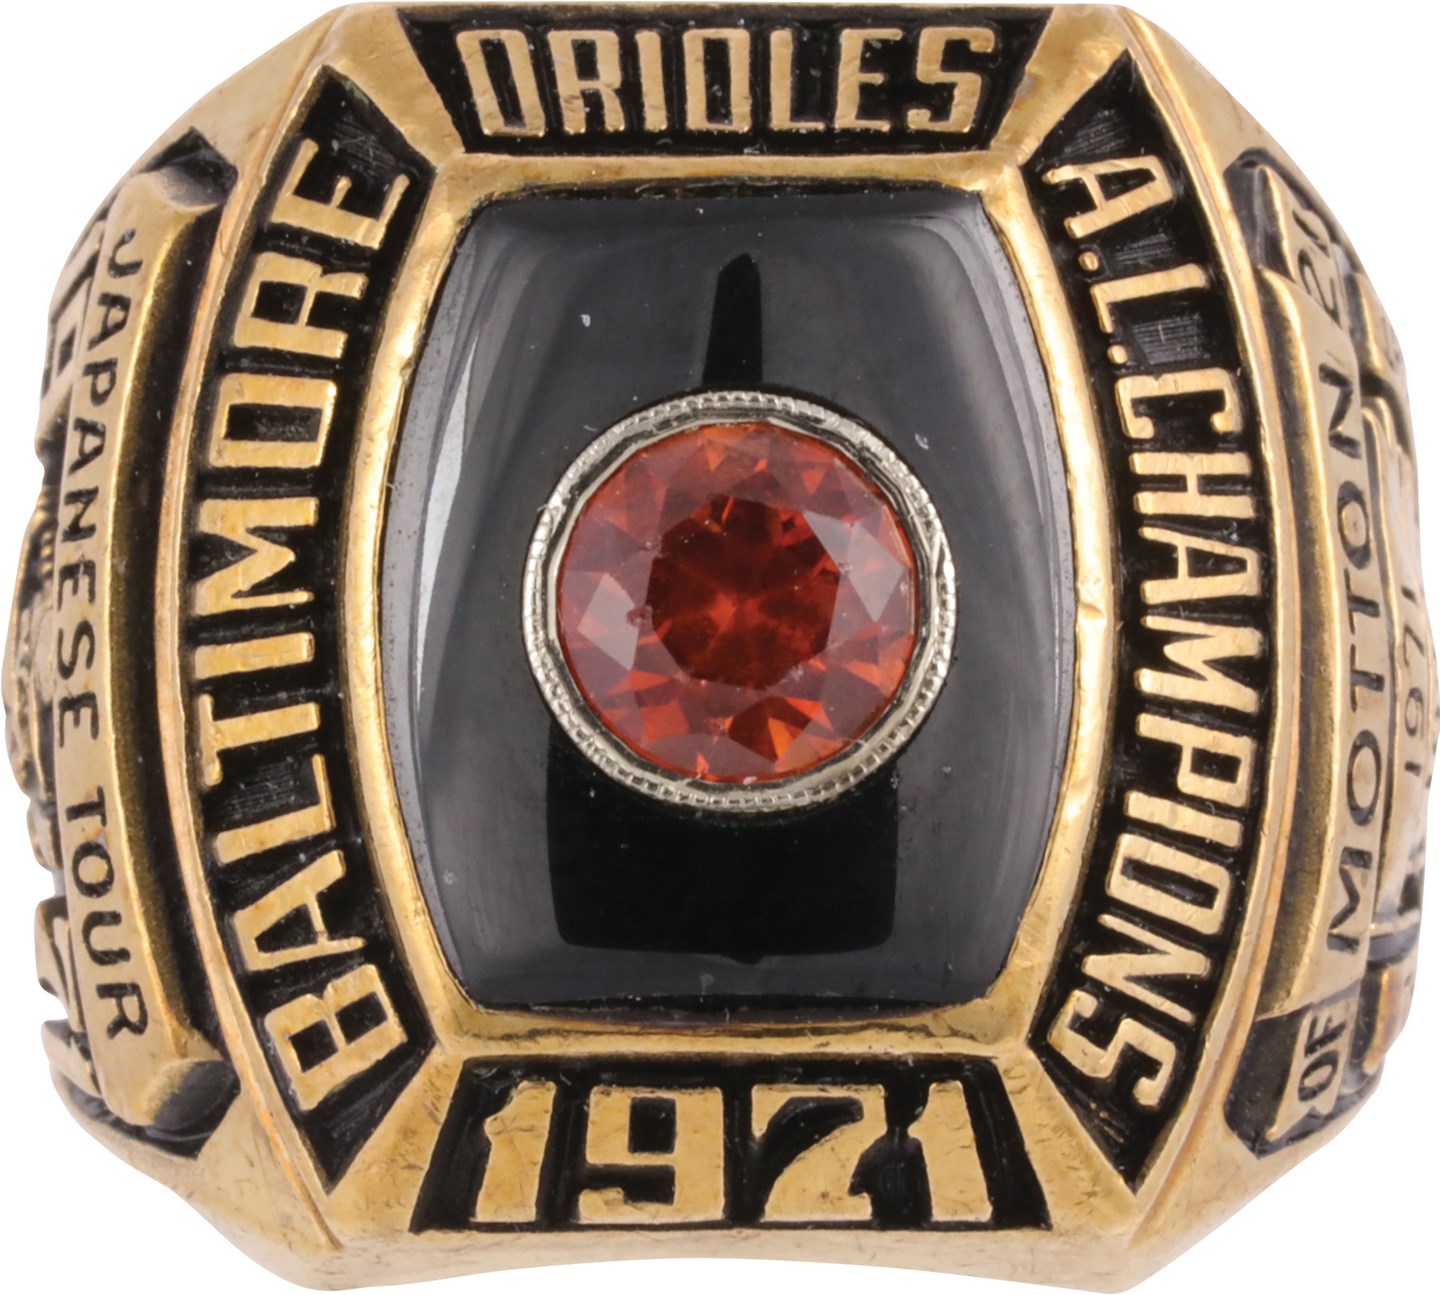 1971 Curt Motton Baltimore Orioles American League Championship Player Ring